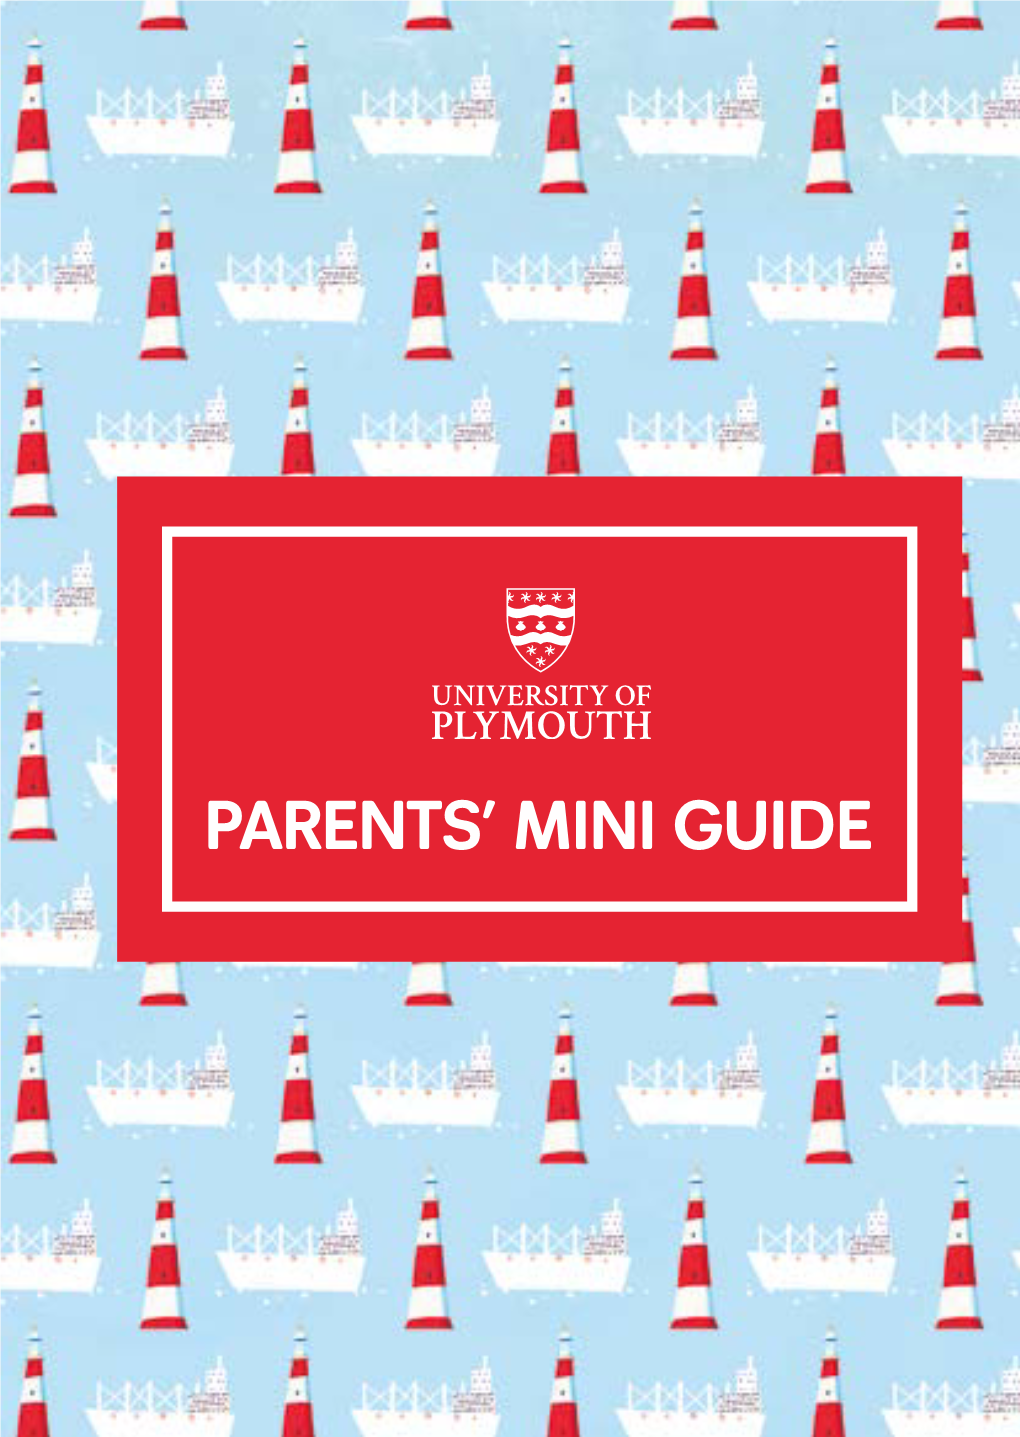 Download a Parents' Mini Guide